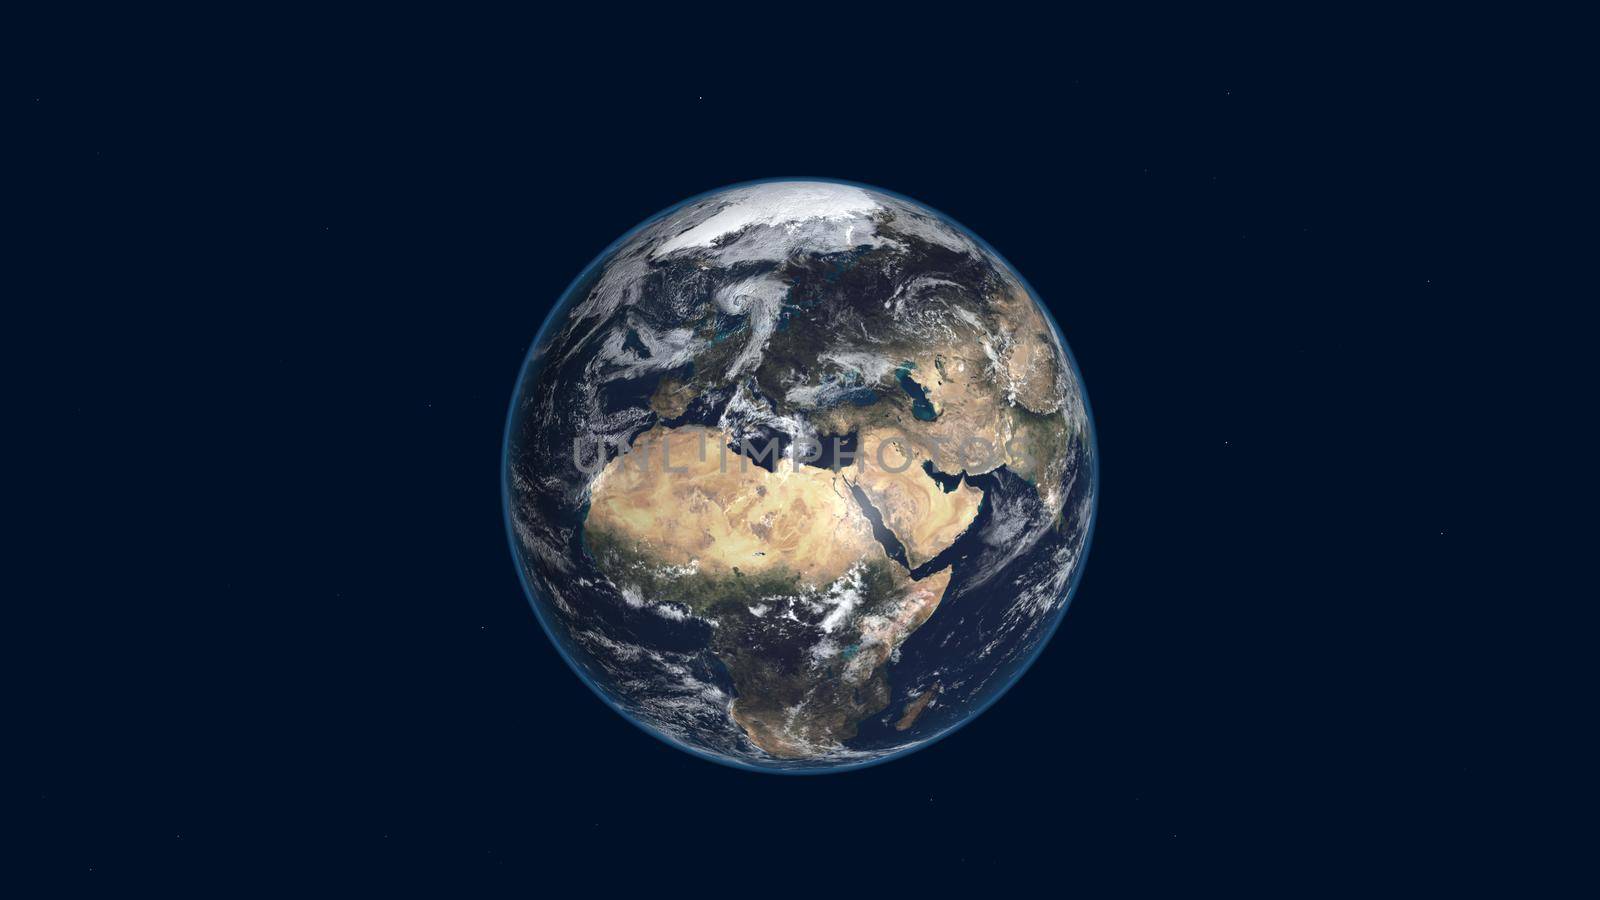 planet earth seen from satellite, 3d render illustration